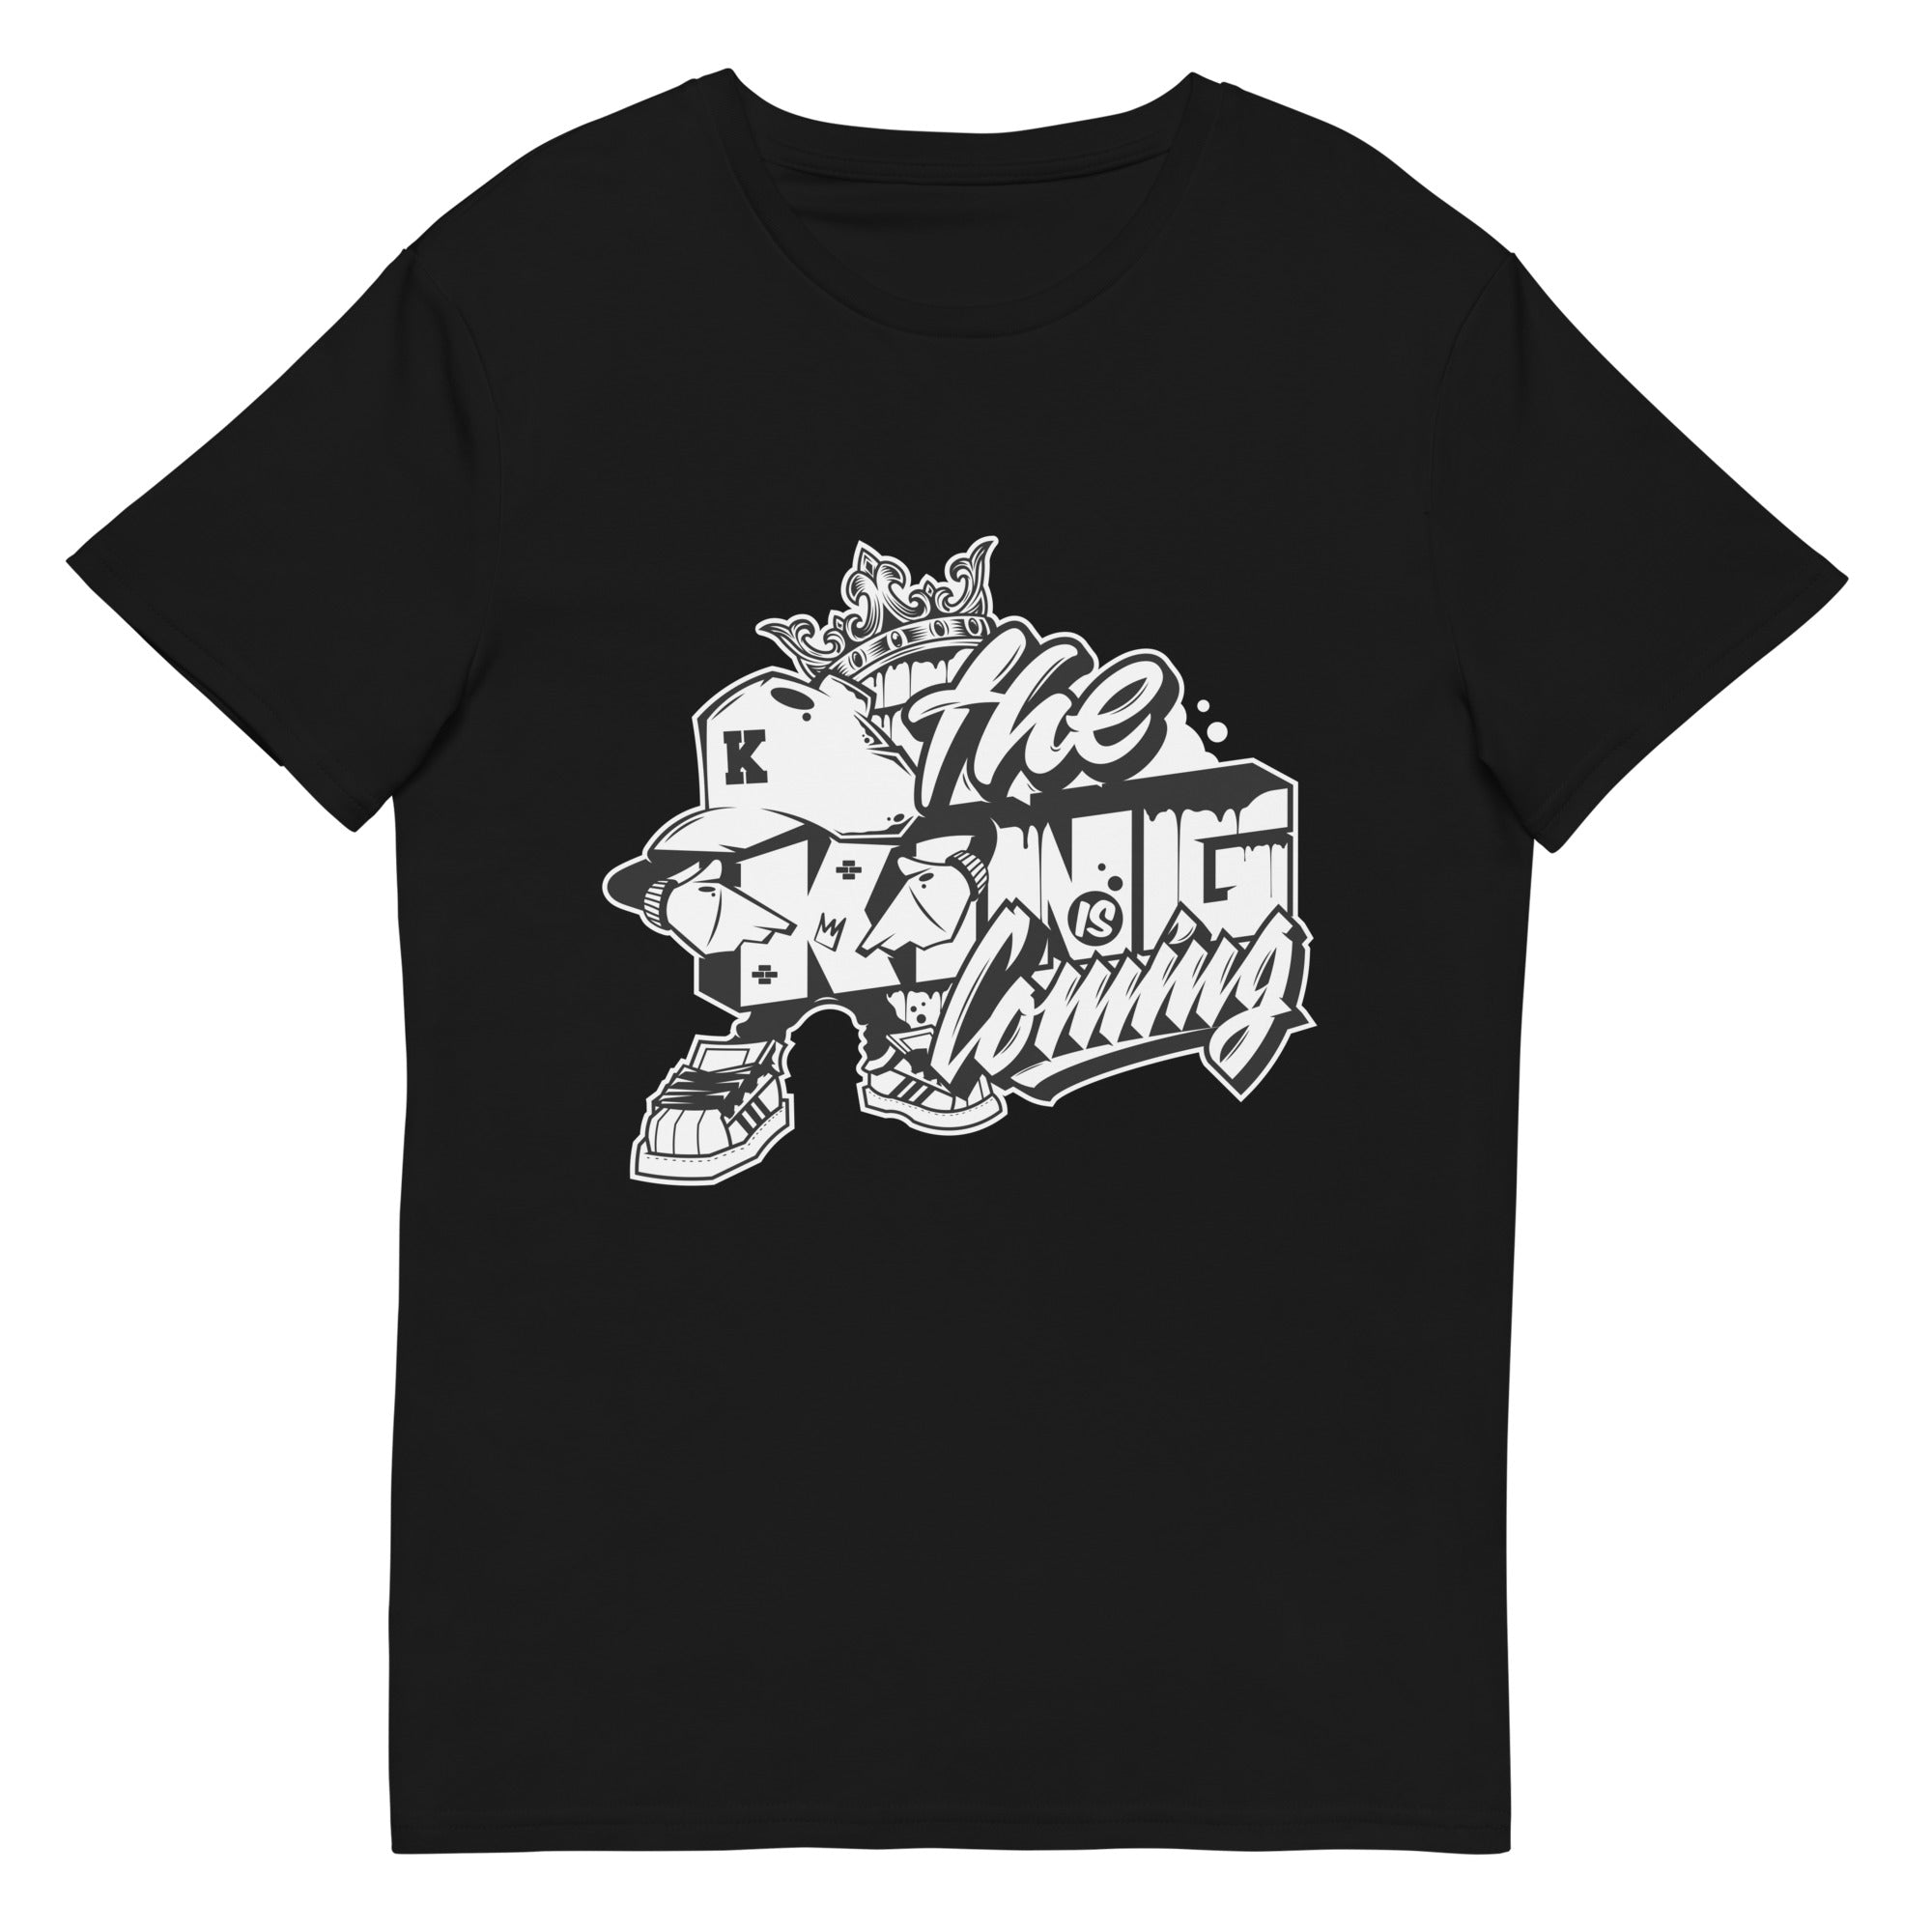 "B Boy - The King Is Coming" Men's Premium Cotton T-Shirt